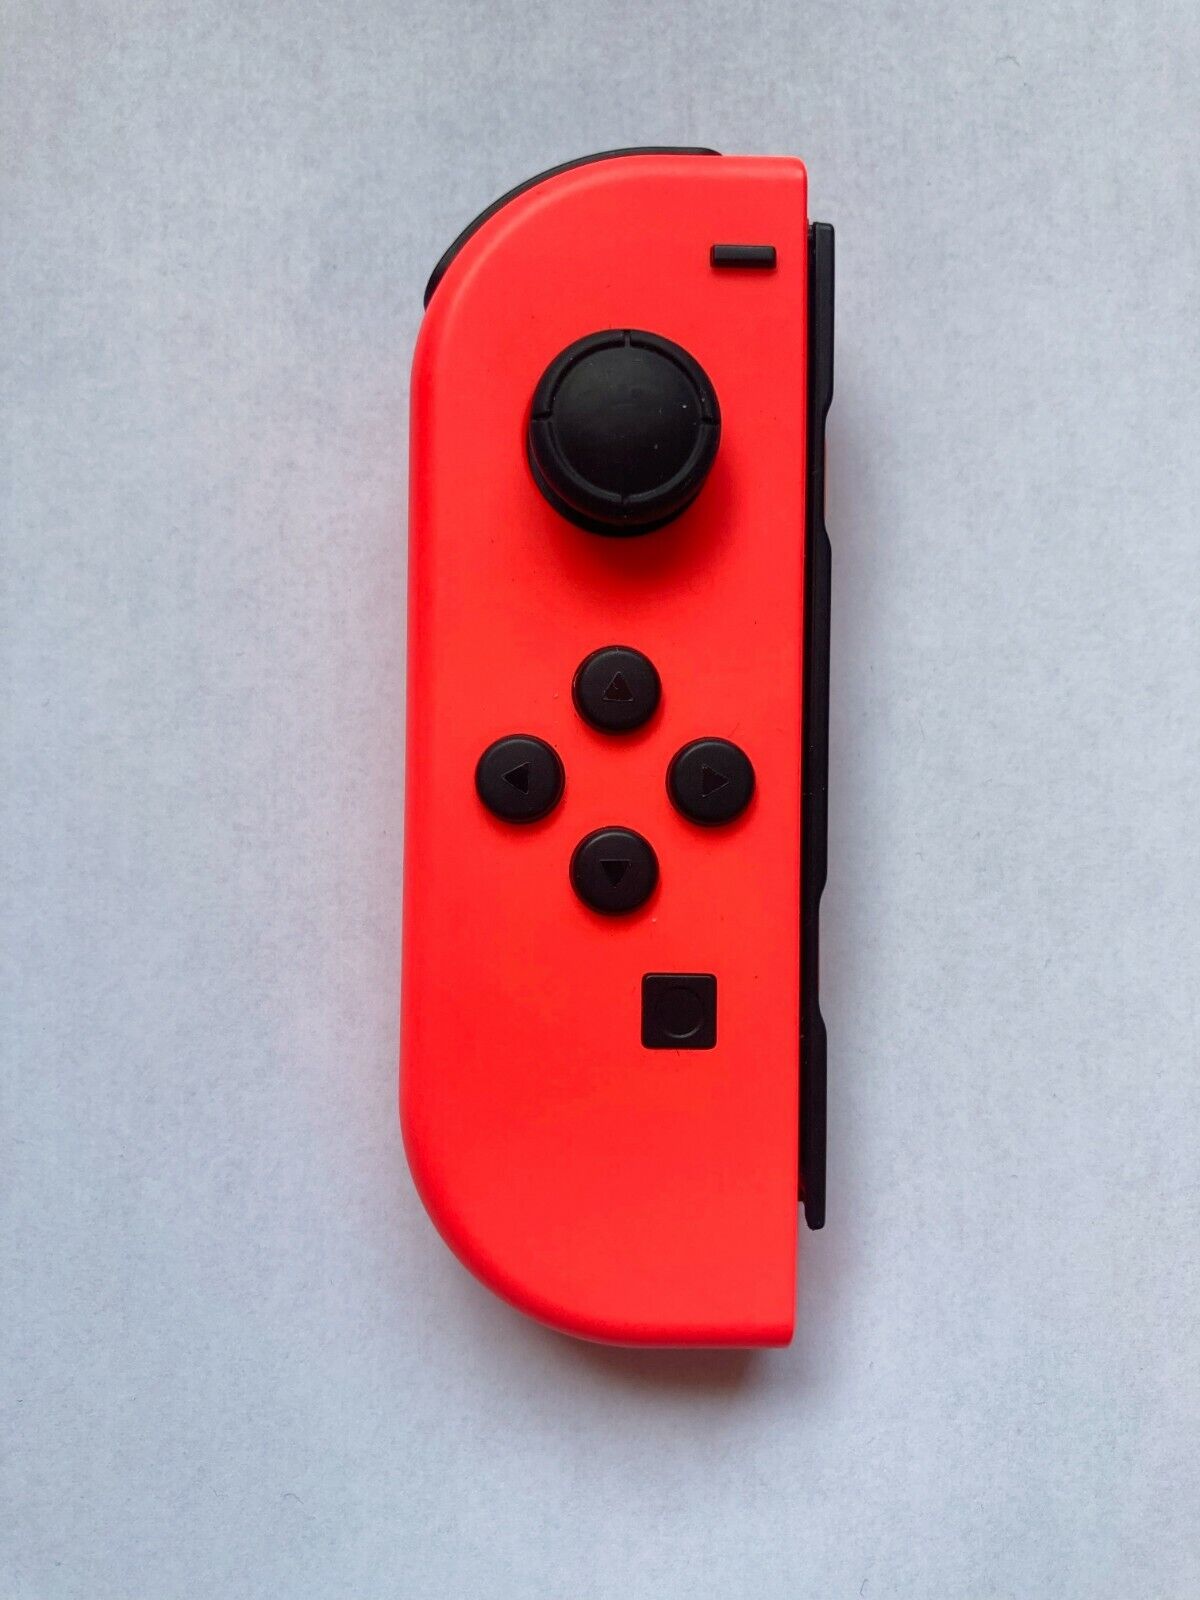 Nintendo Switch OEM Genuine Joy Con Controller - Left or Right Joy-Con